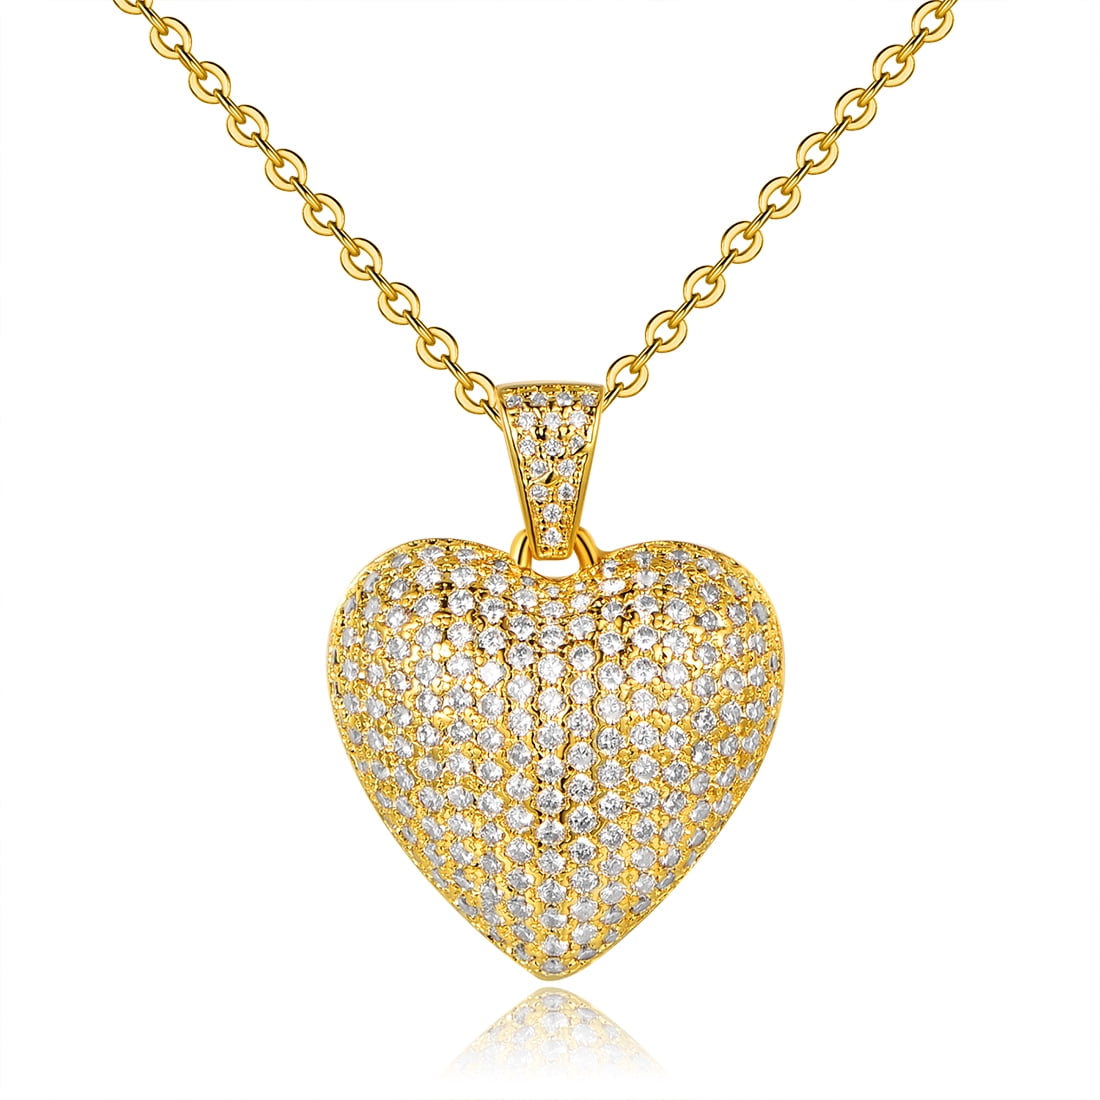 10kt Yellow Gold Womens CZ Cubic Zirconia Heart Initial C Charm Pendant 